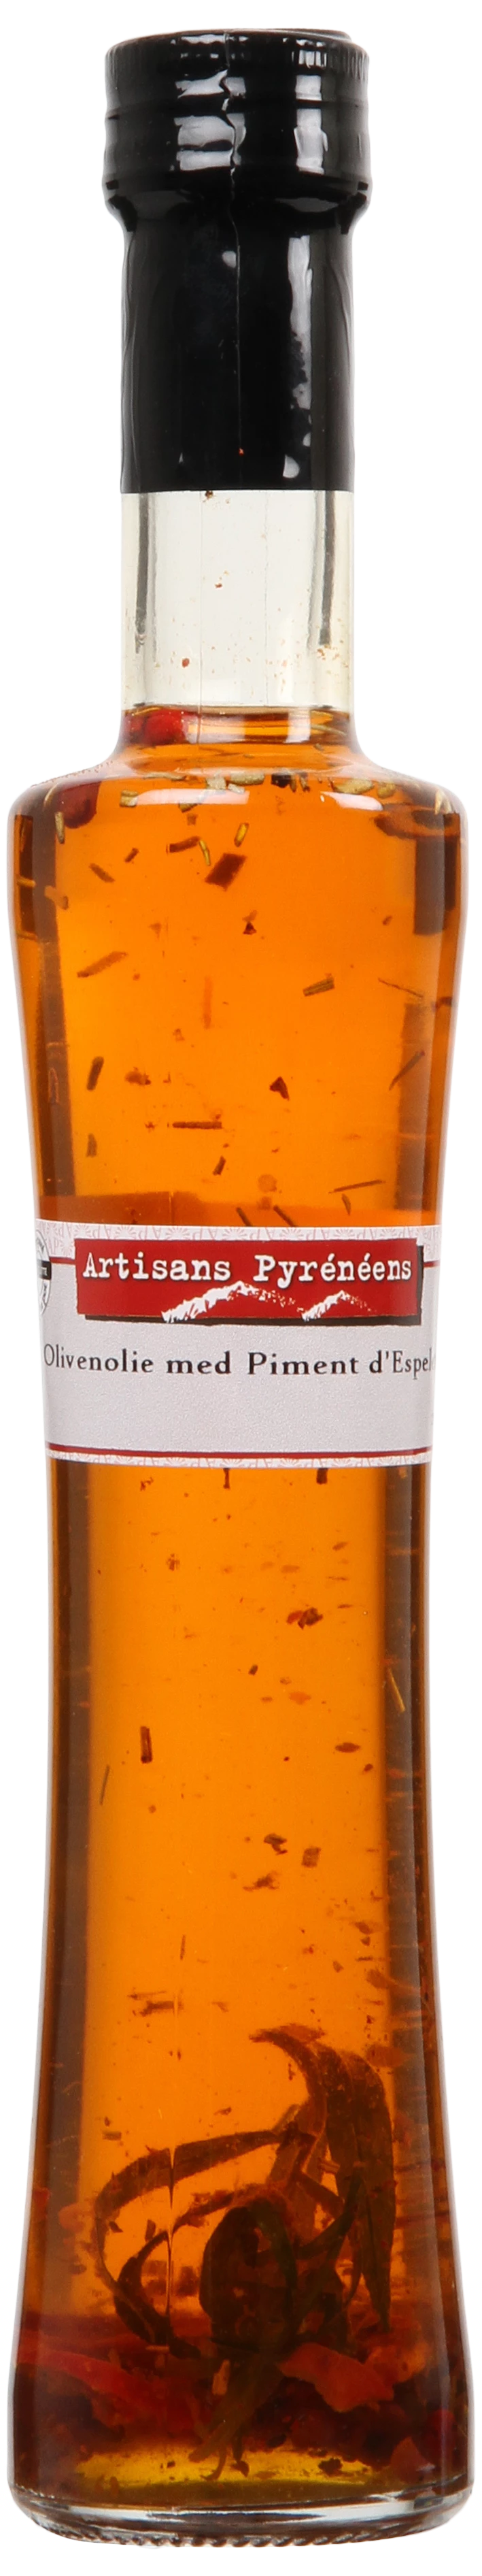 Løgismose Delikatesser Artisans Pyrénéens Olivenolie med piment d'espelette 200ml - 220121